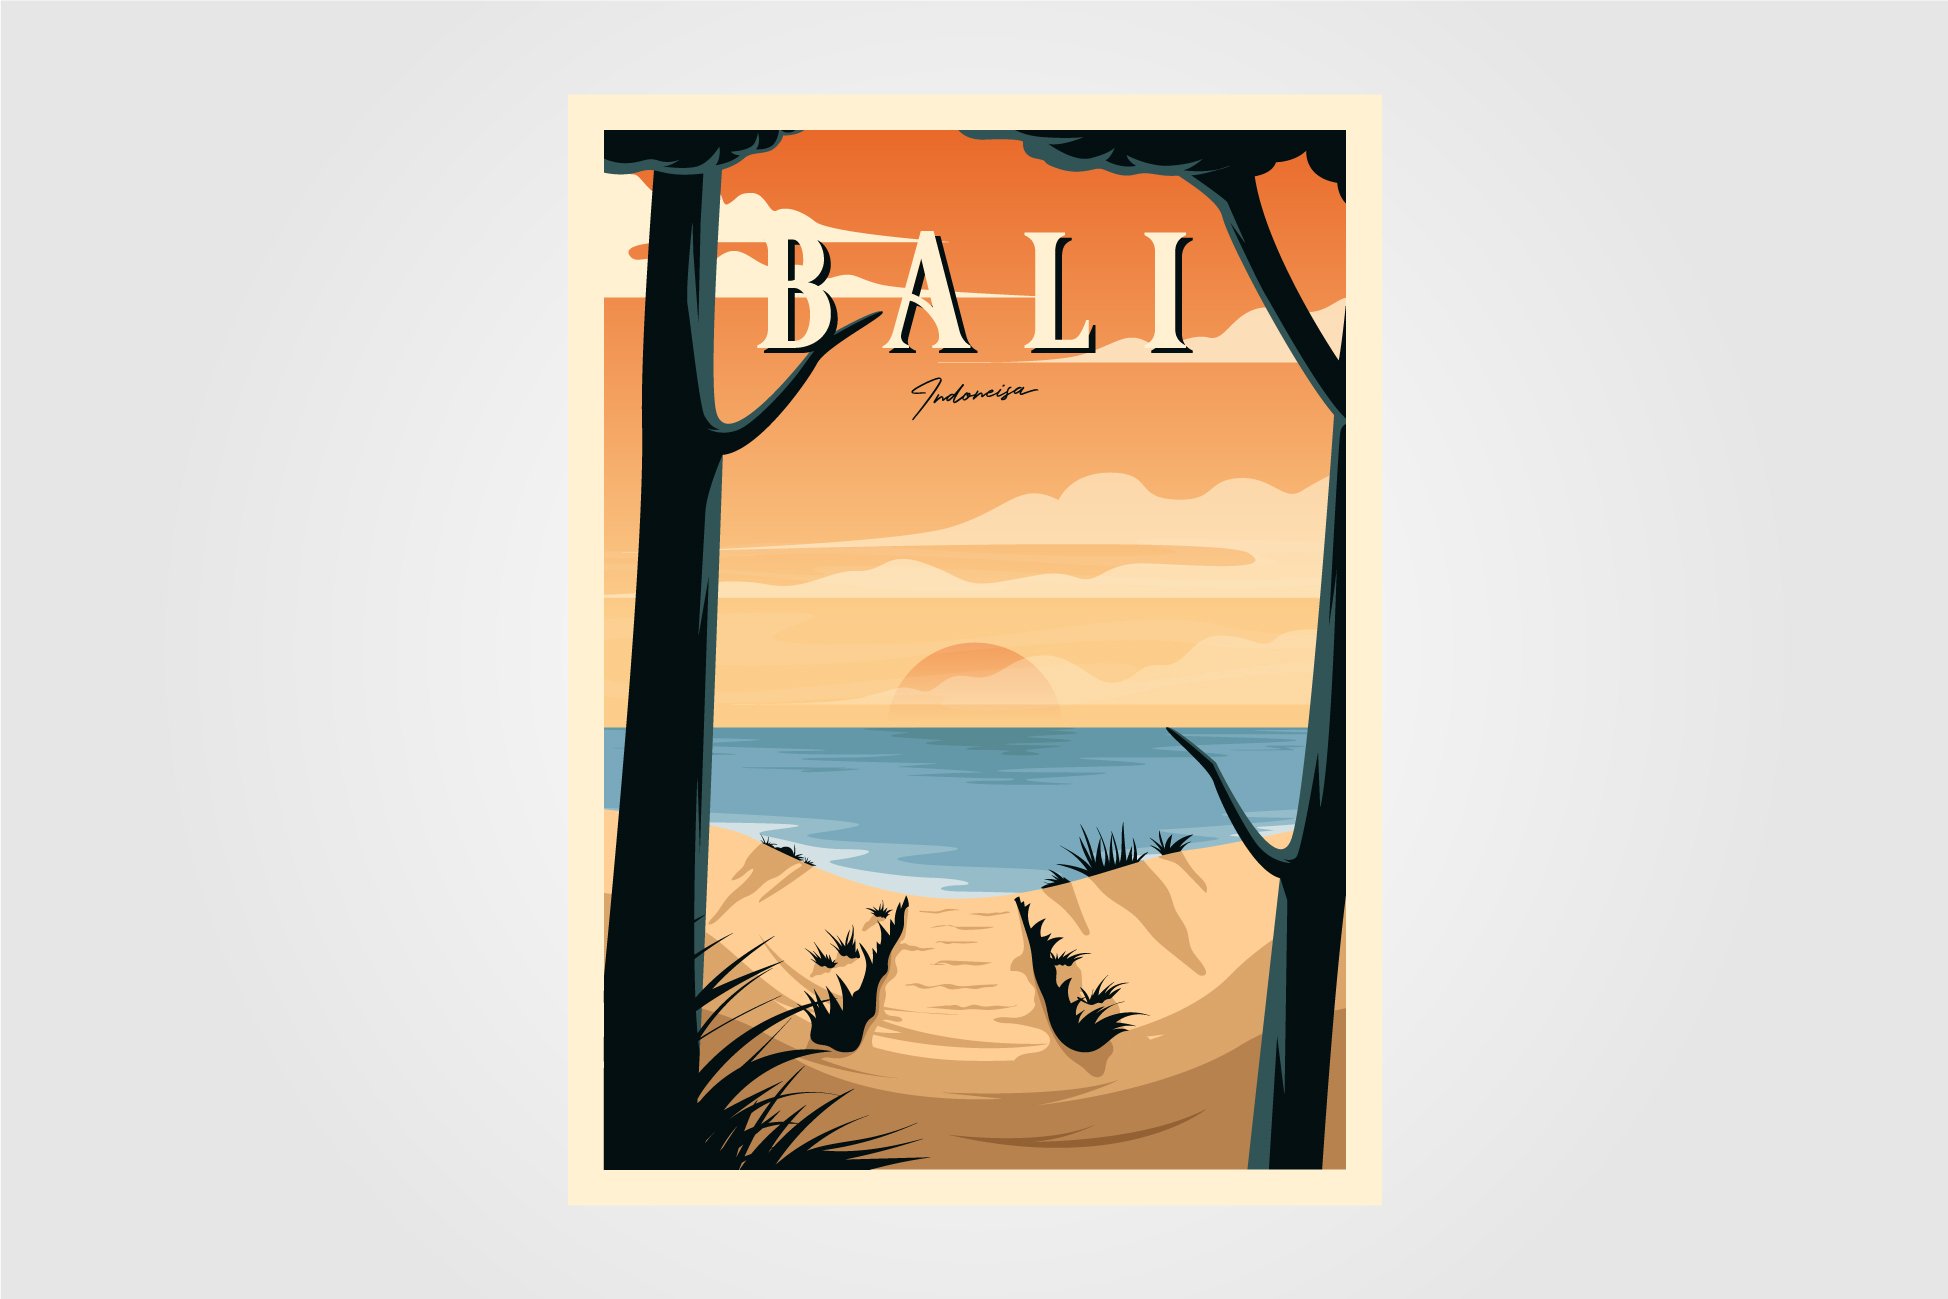 Bali Beach Sunset Vintage Travel cover image.